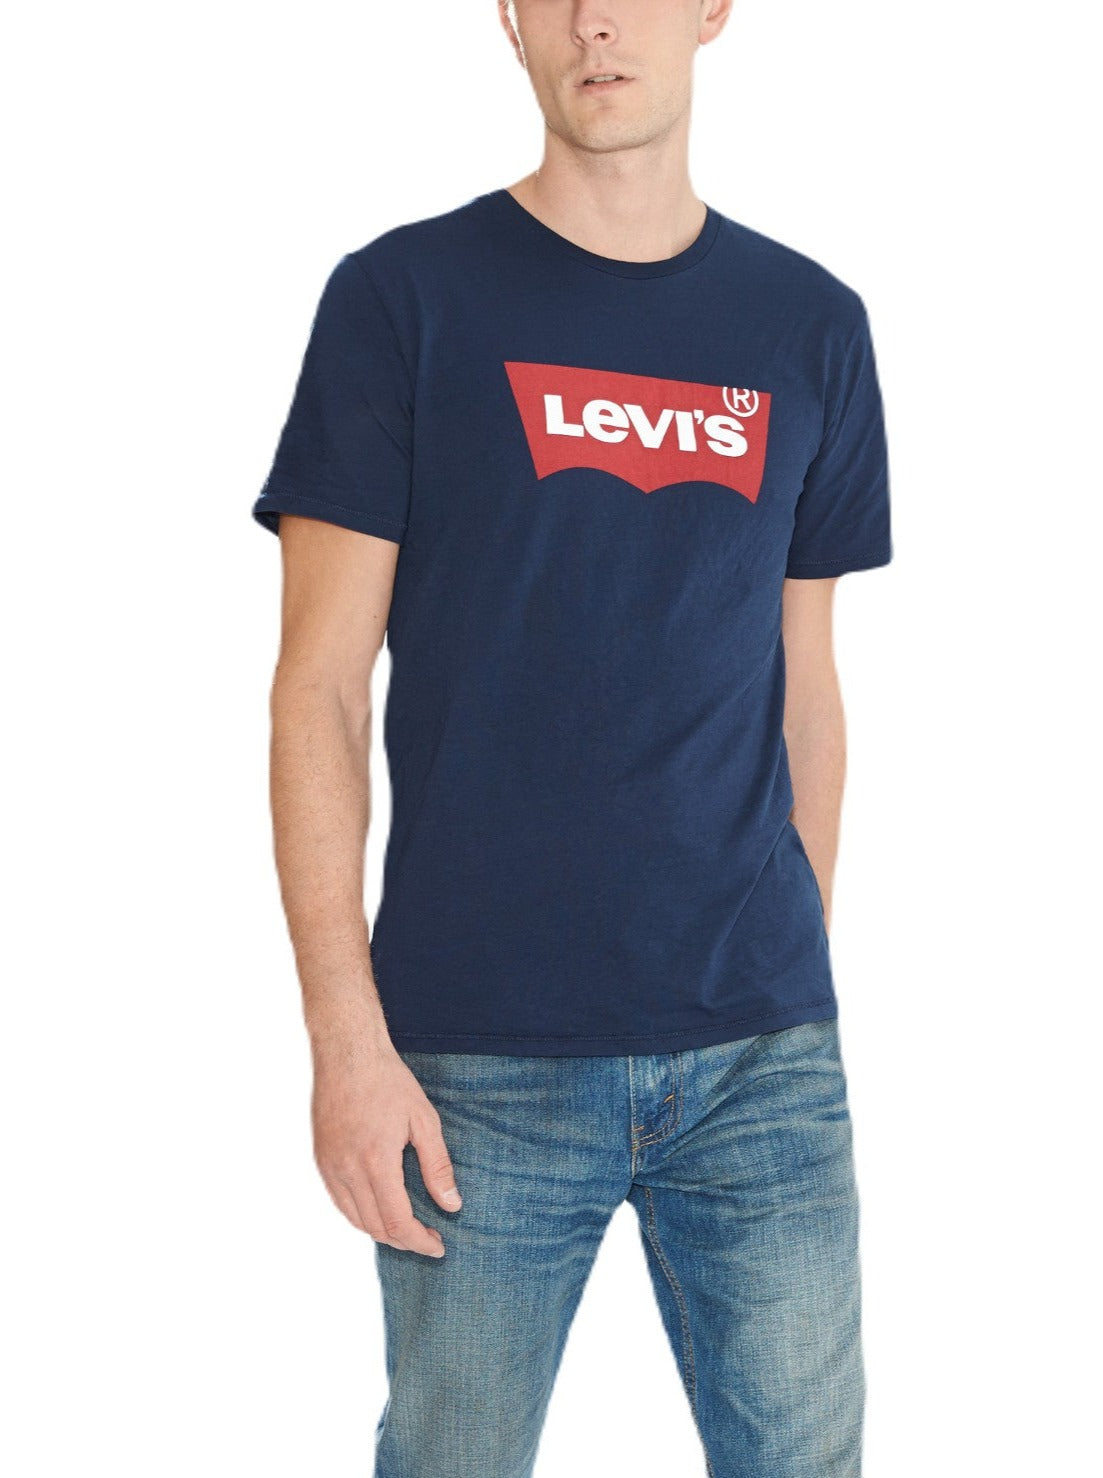 Levi's - Batwing Tee - Dress Blues